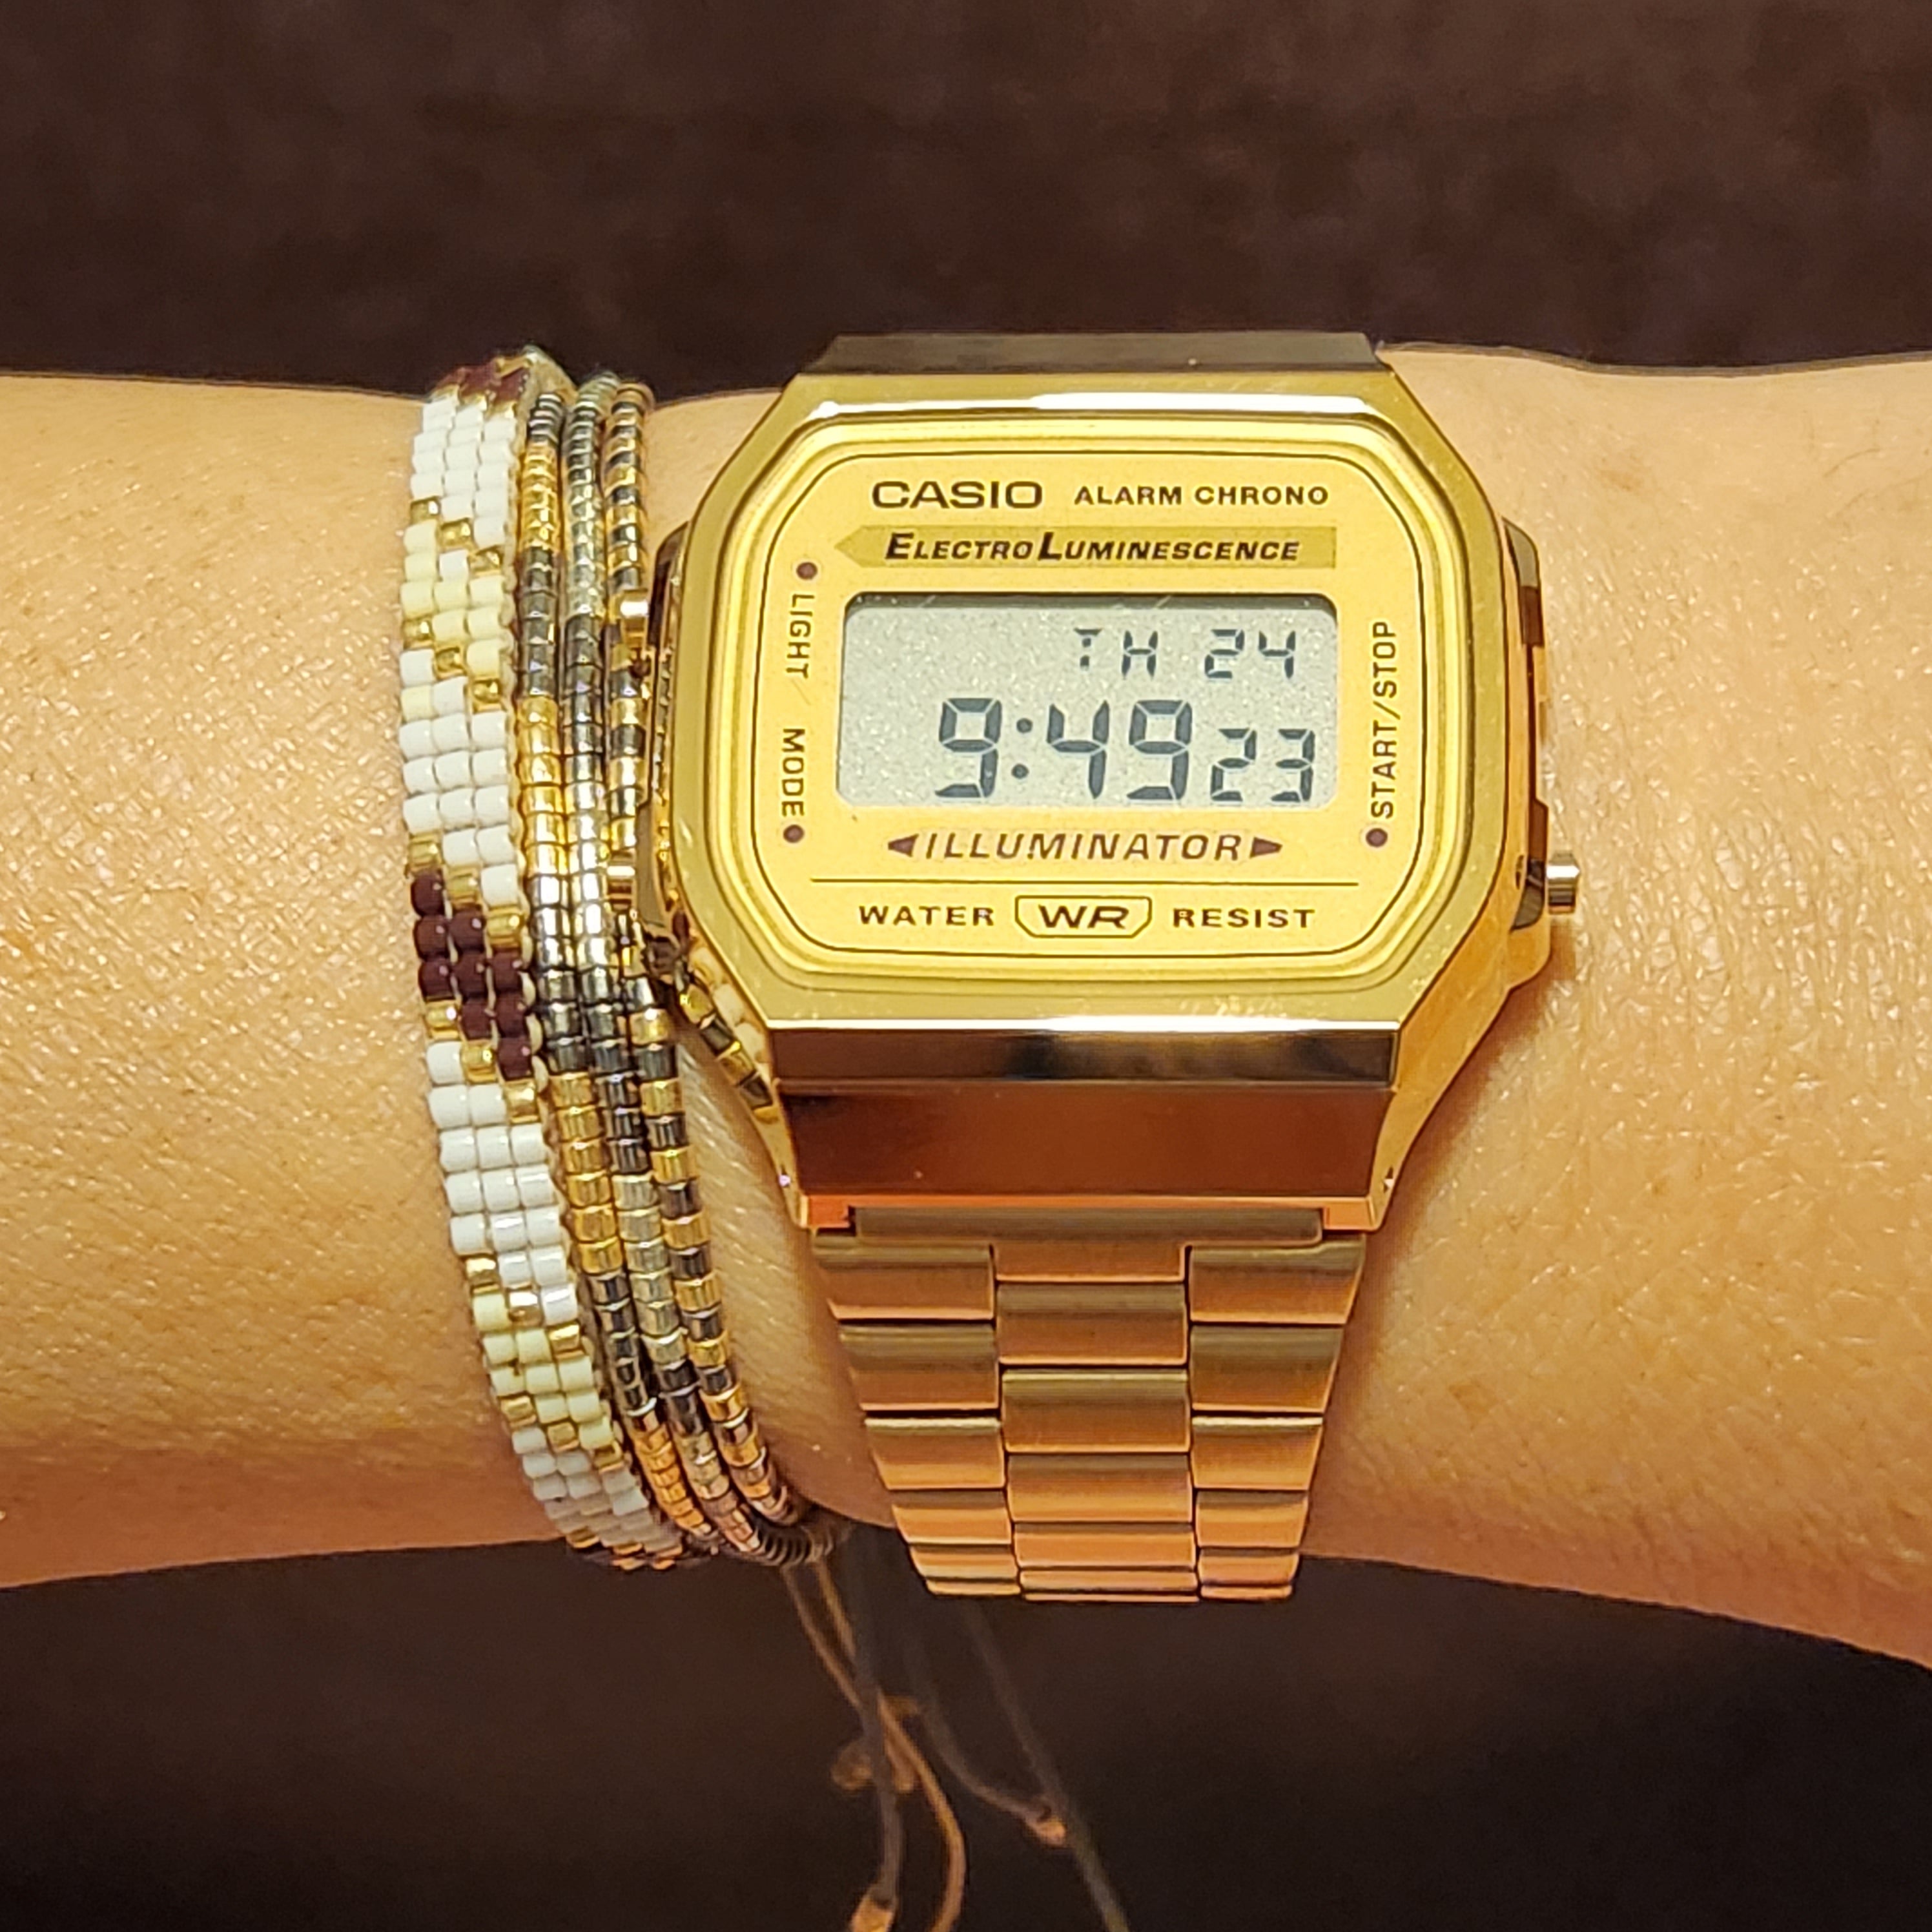 copy of Reloj Casio dorado retro vintage A168WG